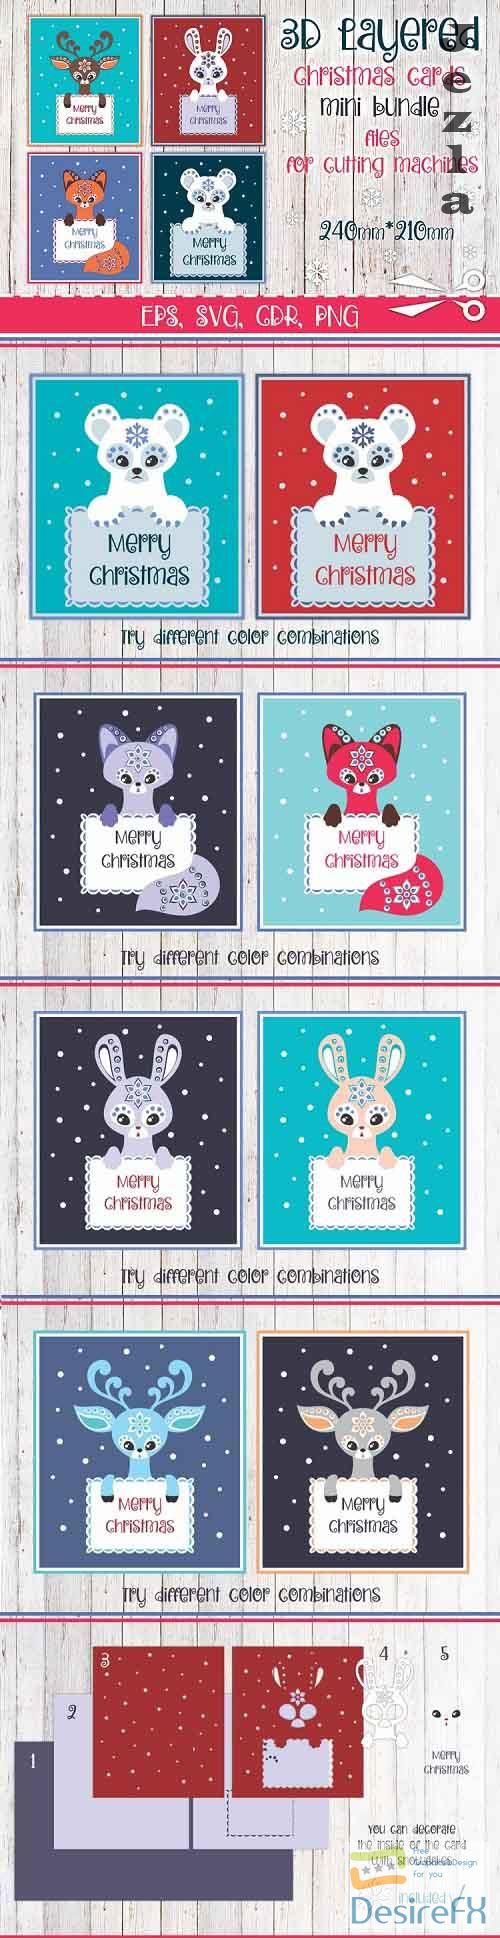 3D Layered Christmas cards bundle - 692598